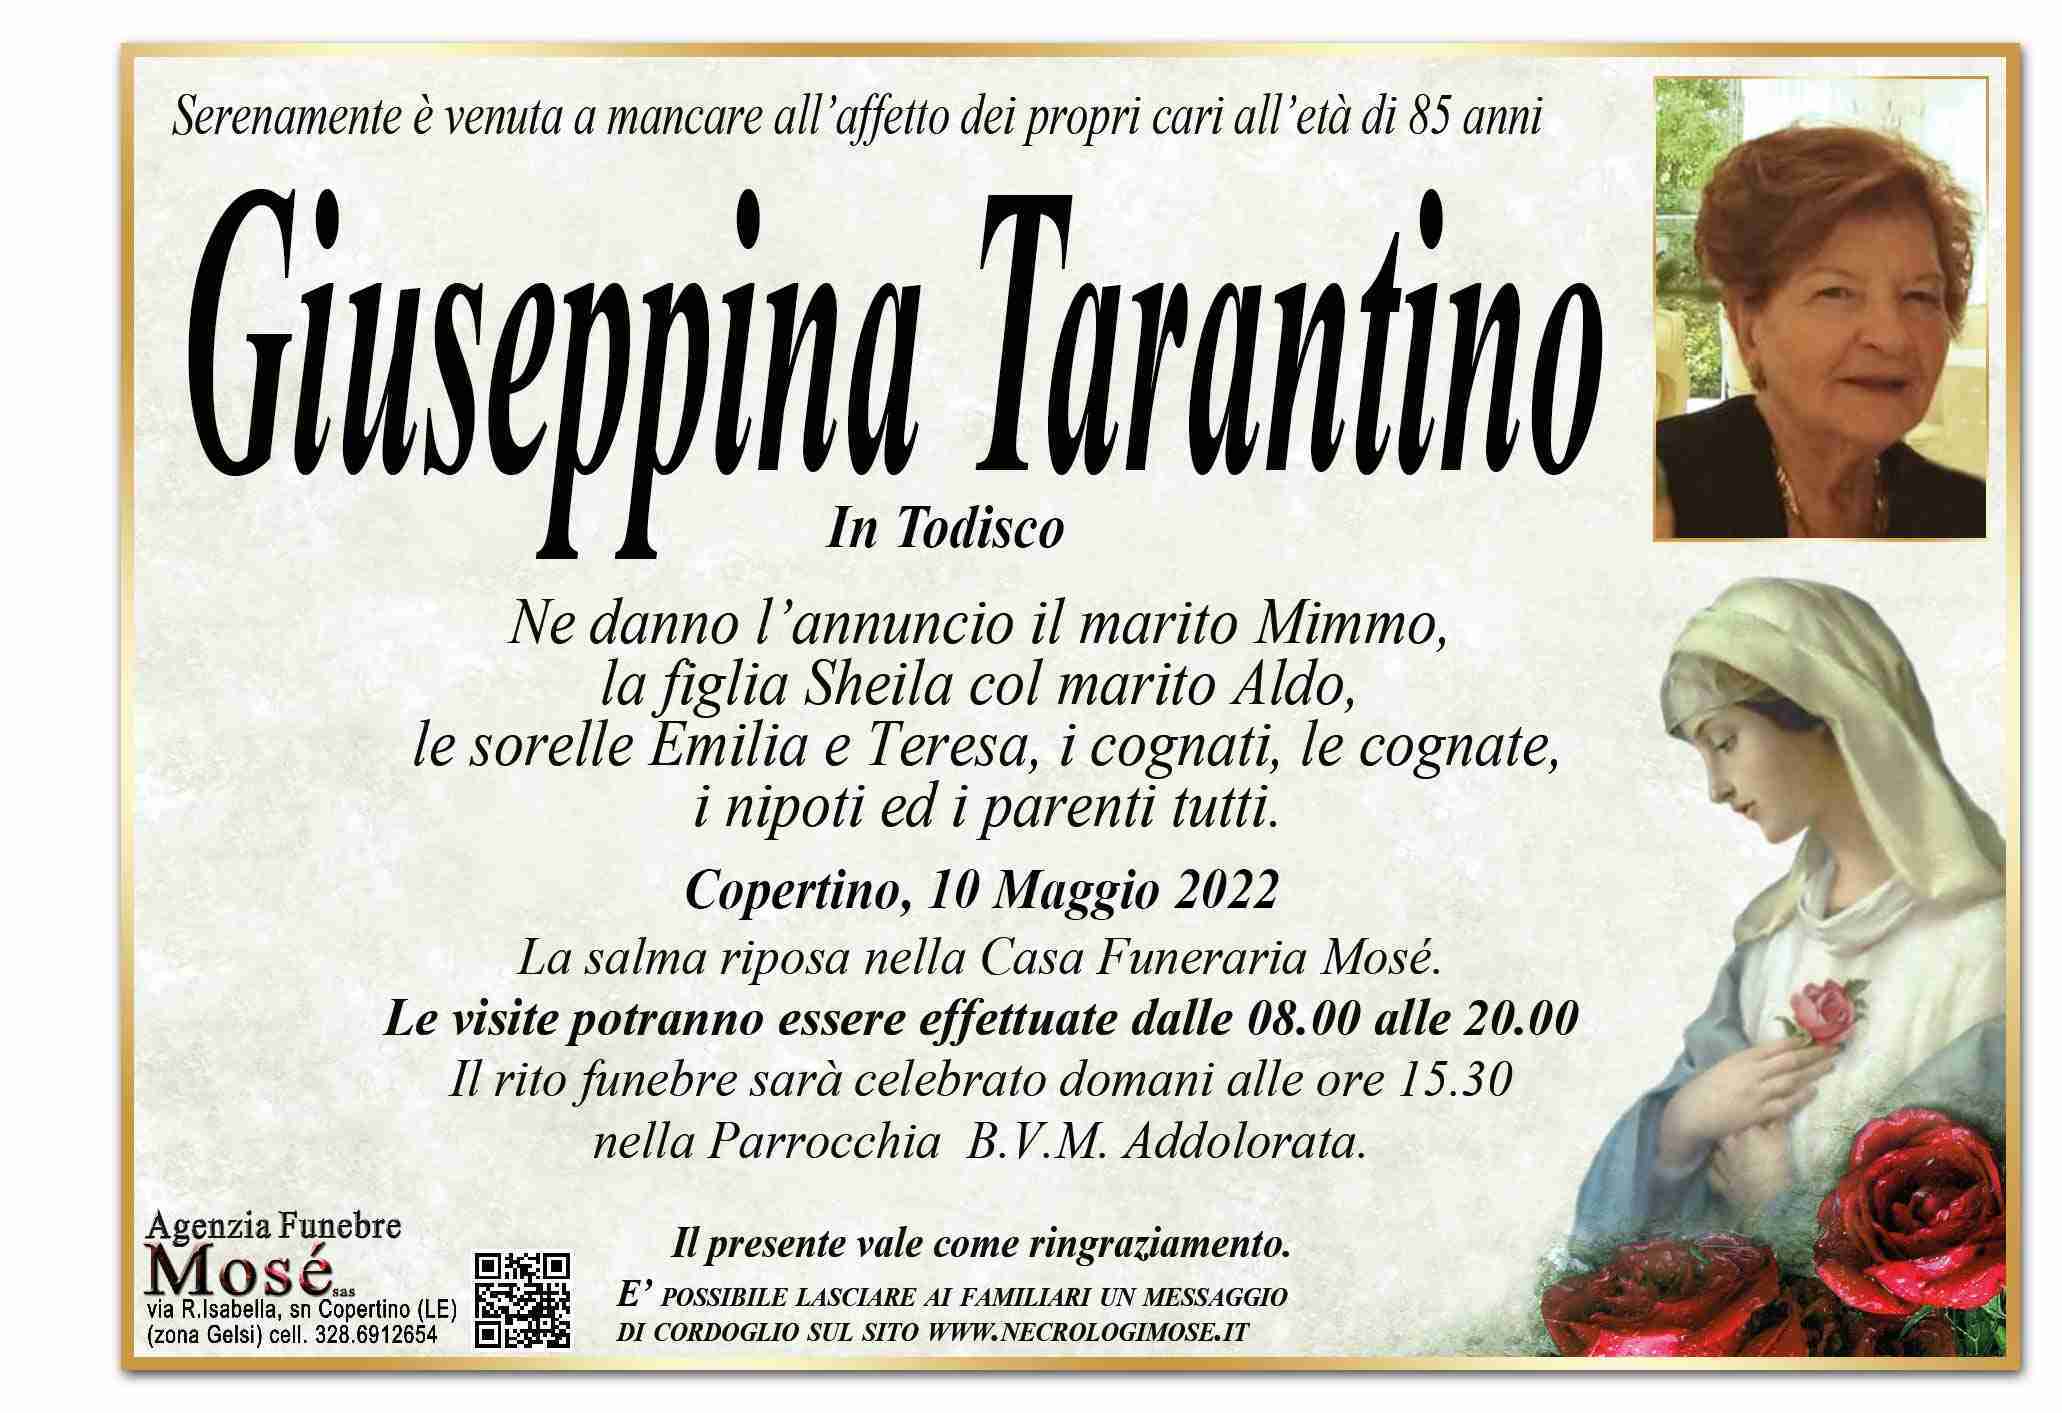 Giuseppina Tarantino